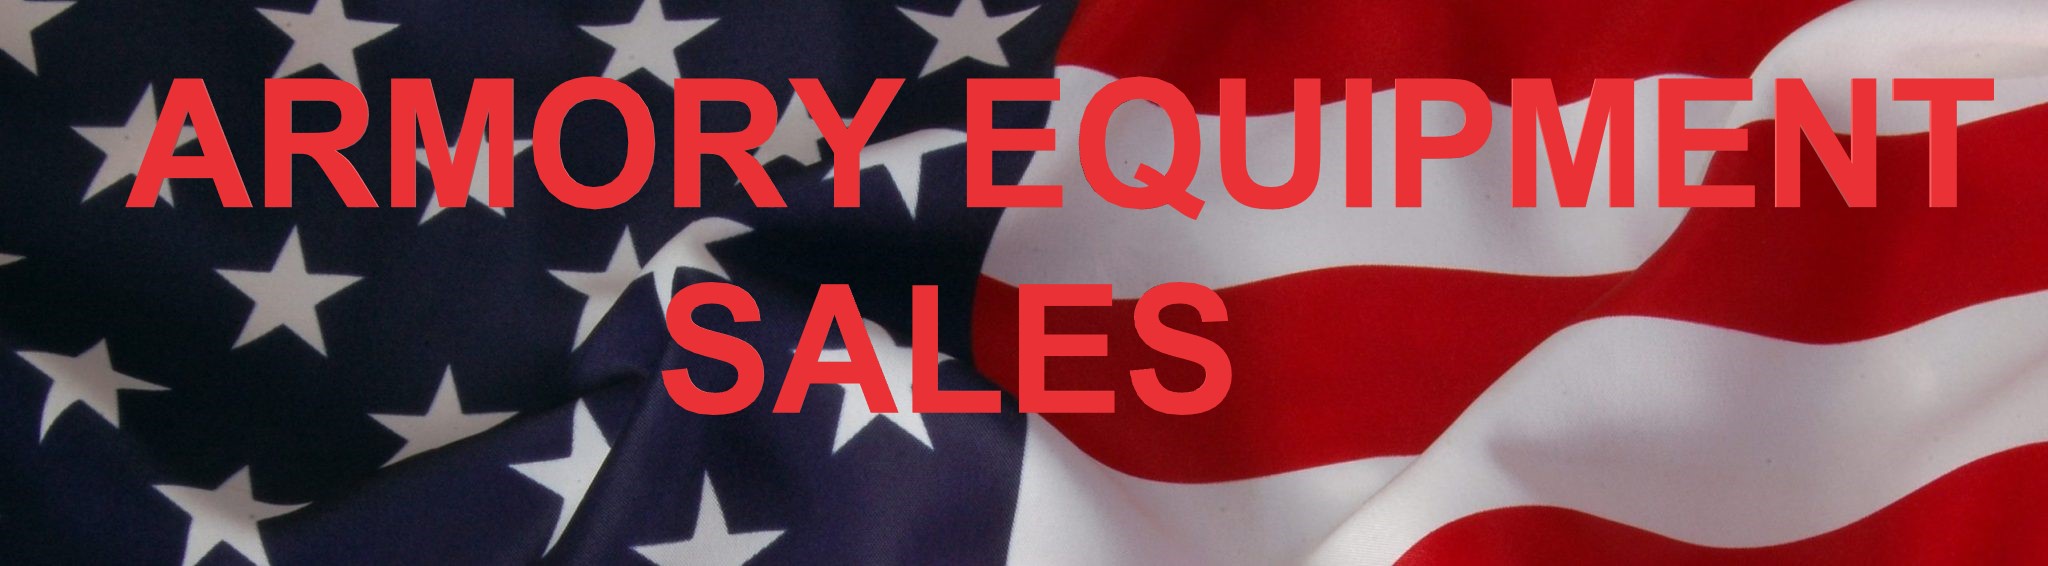 Armory Equipment Sales